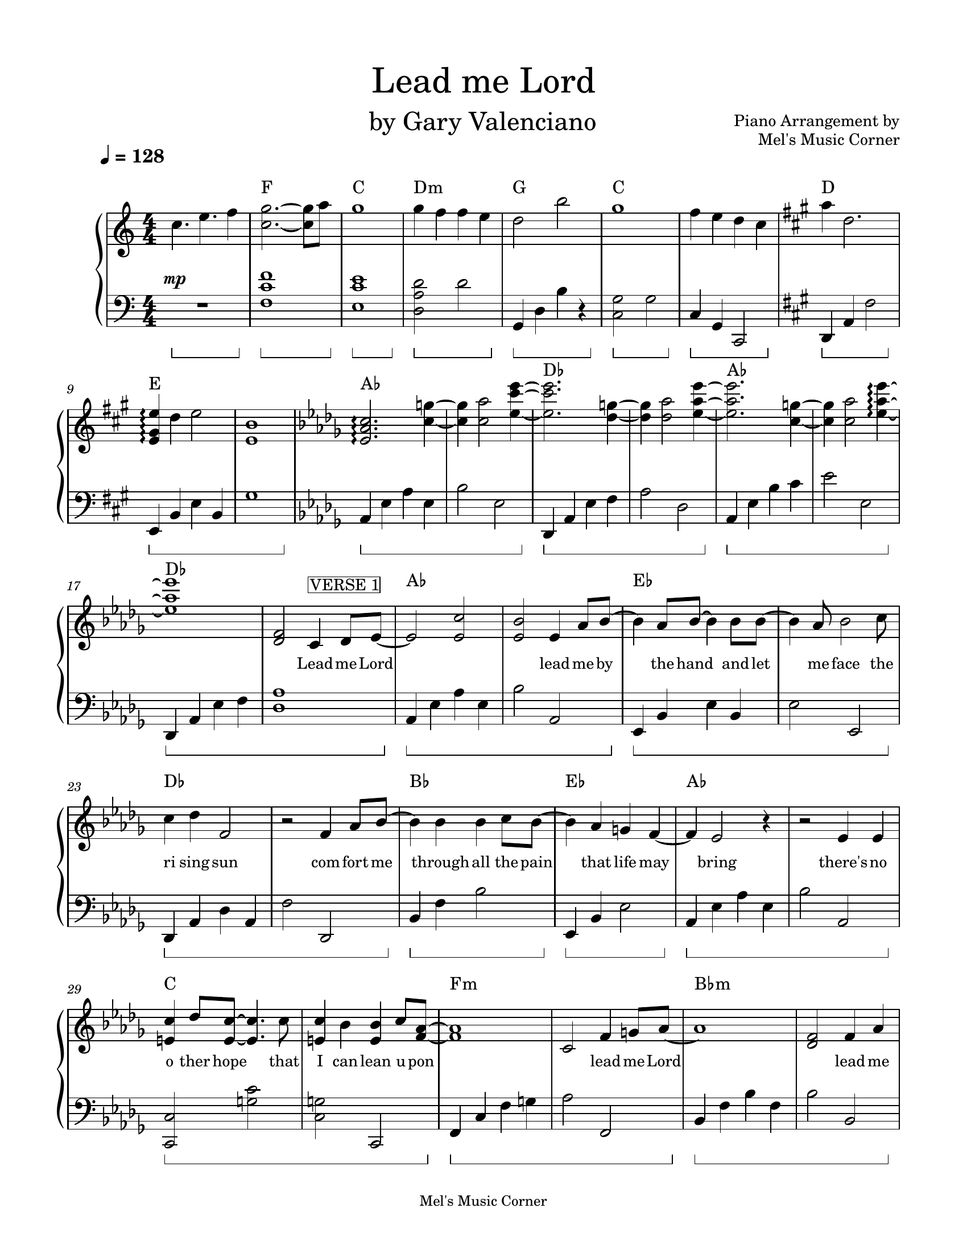 Gary Valenciano - Lead me Lord (piano sheet music) 曲谱 by Mel's Music Corner